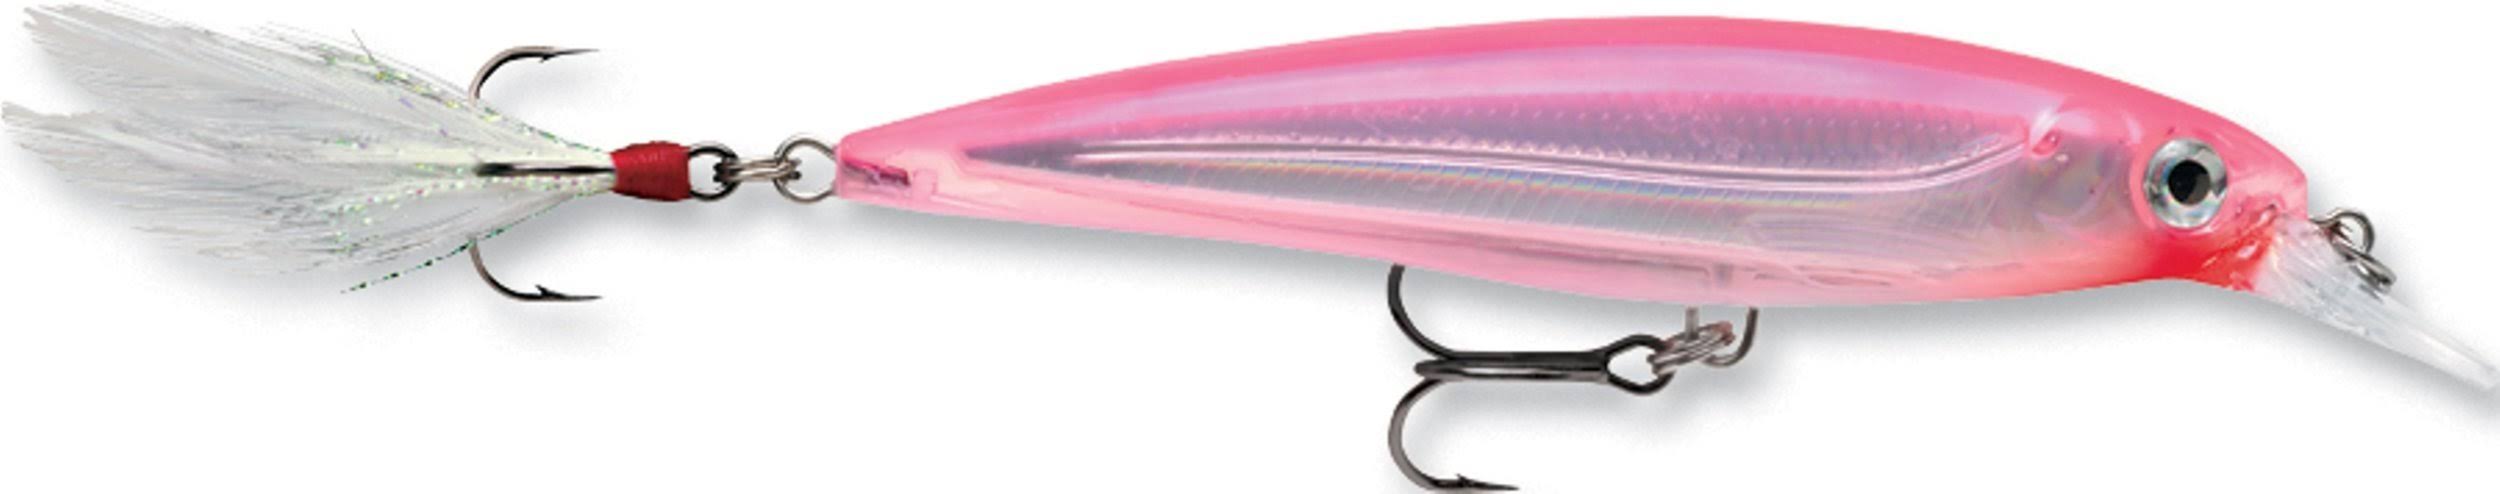 Rapala X-Rap Jerkbait Fishing Lure - Hot Pink, Size 3.125